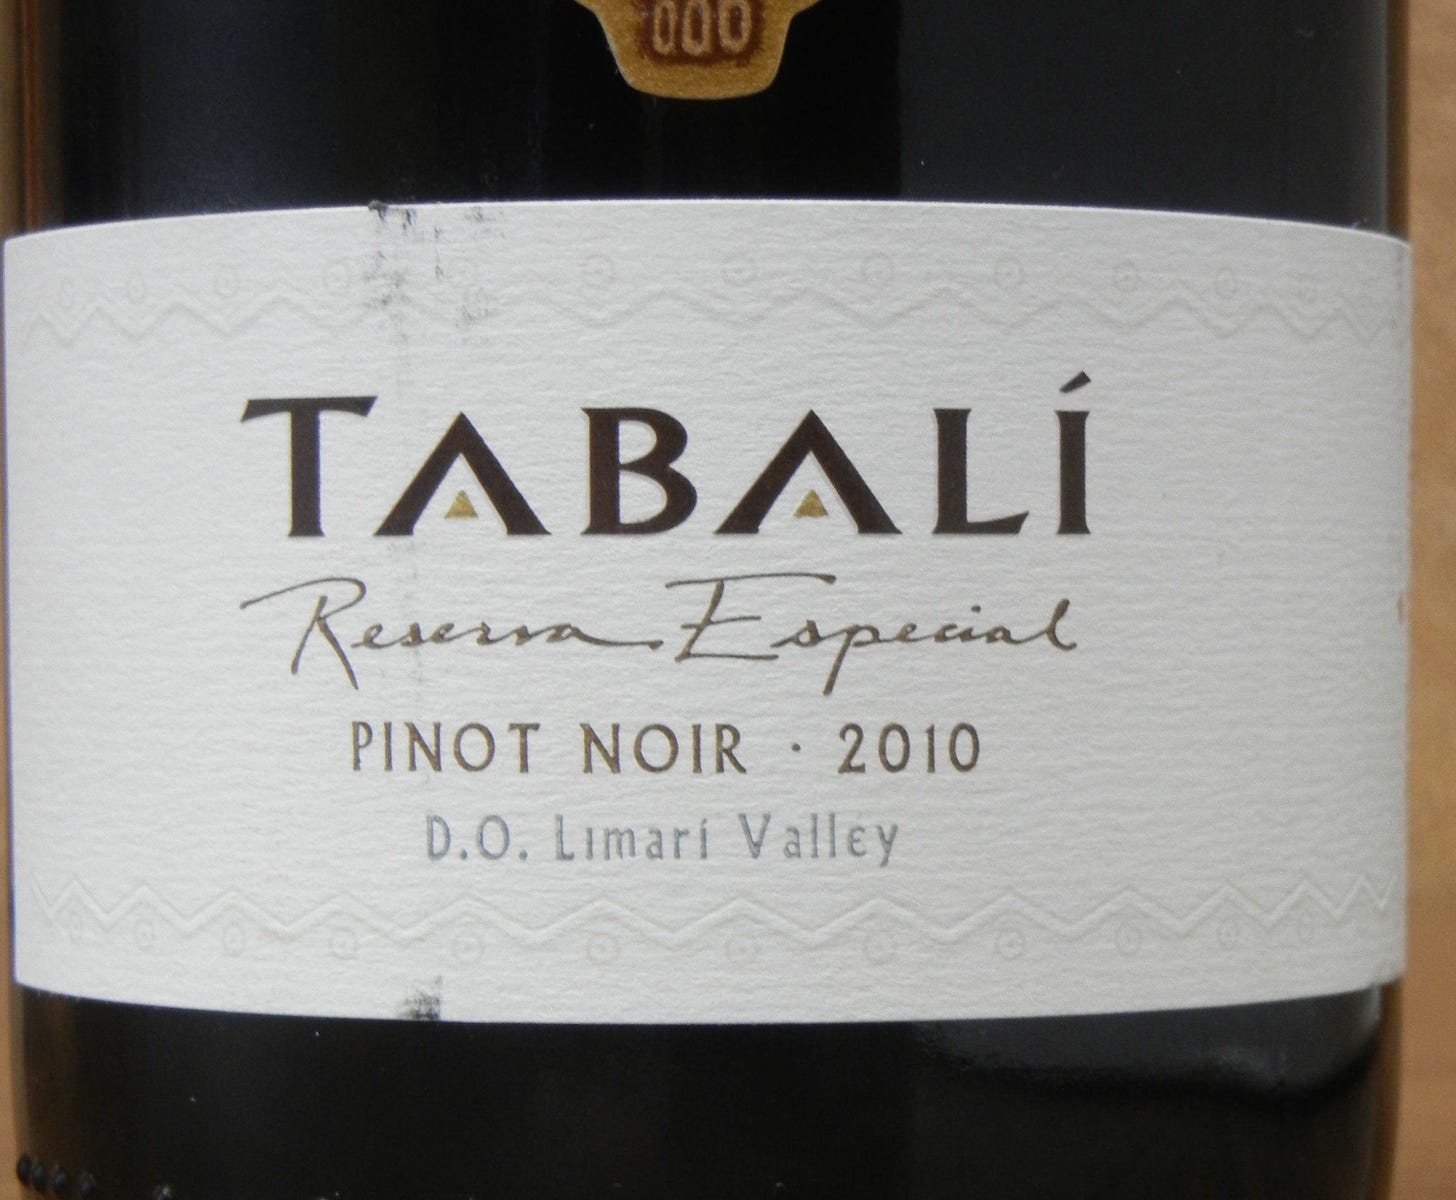 Tabali Pinot Noir 2010 Label - BC Pinot Noir Tasting Review 10